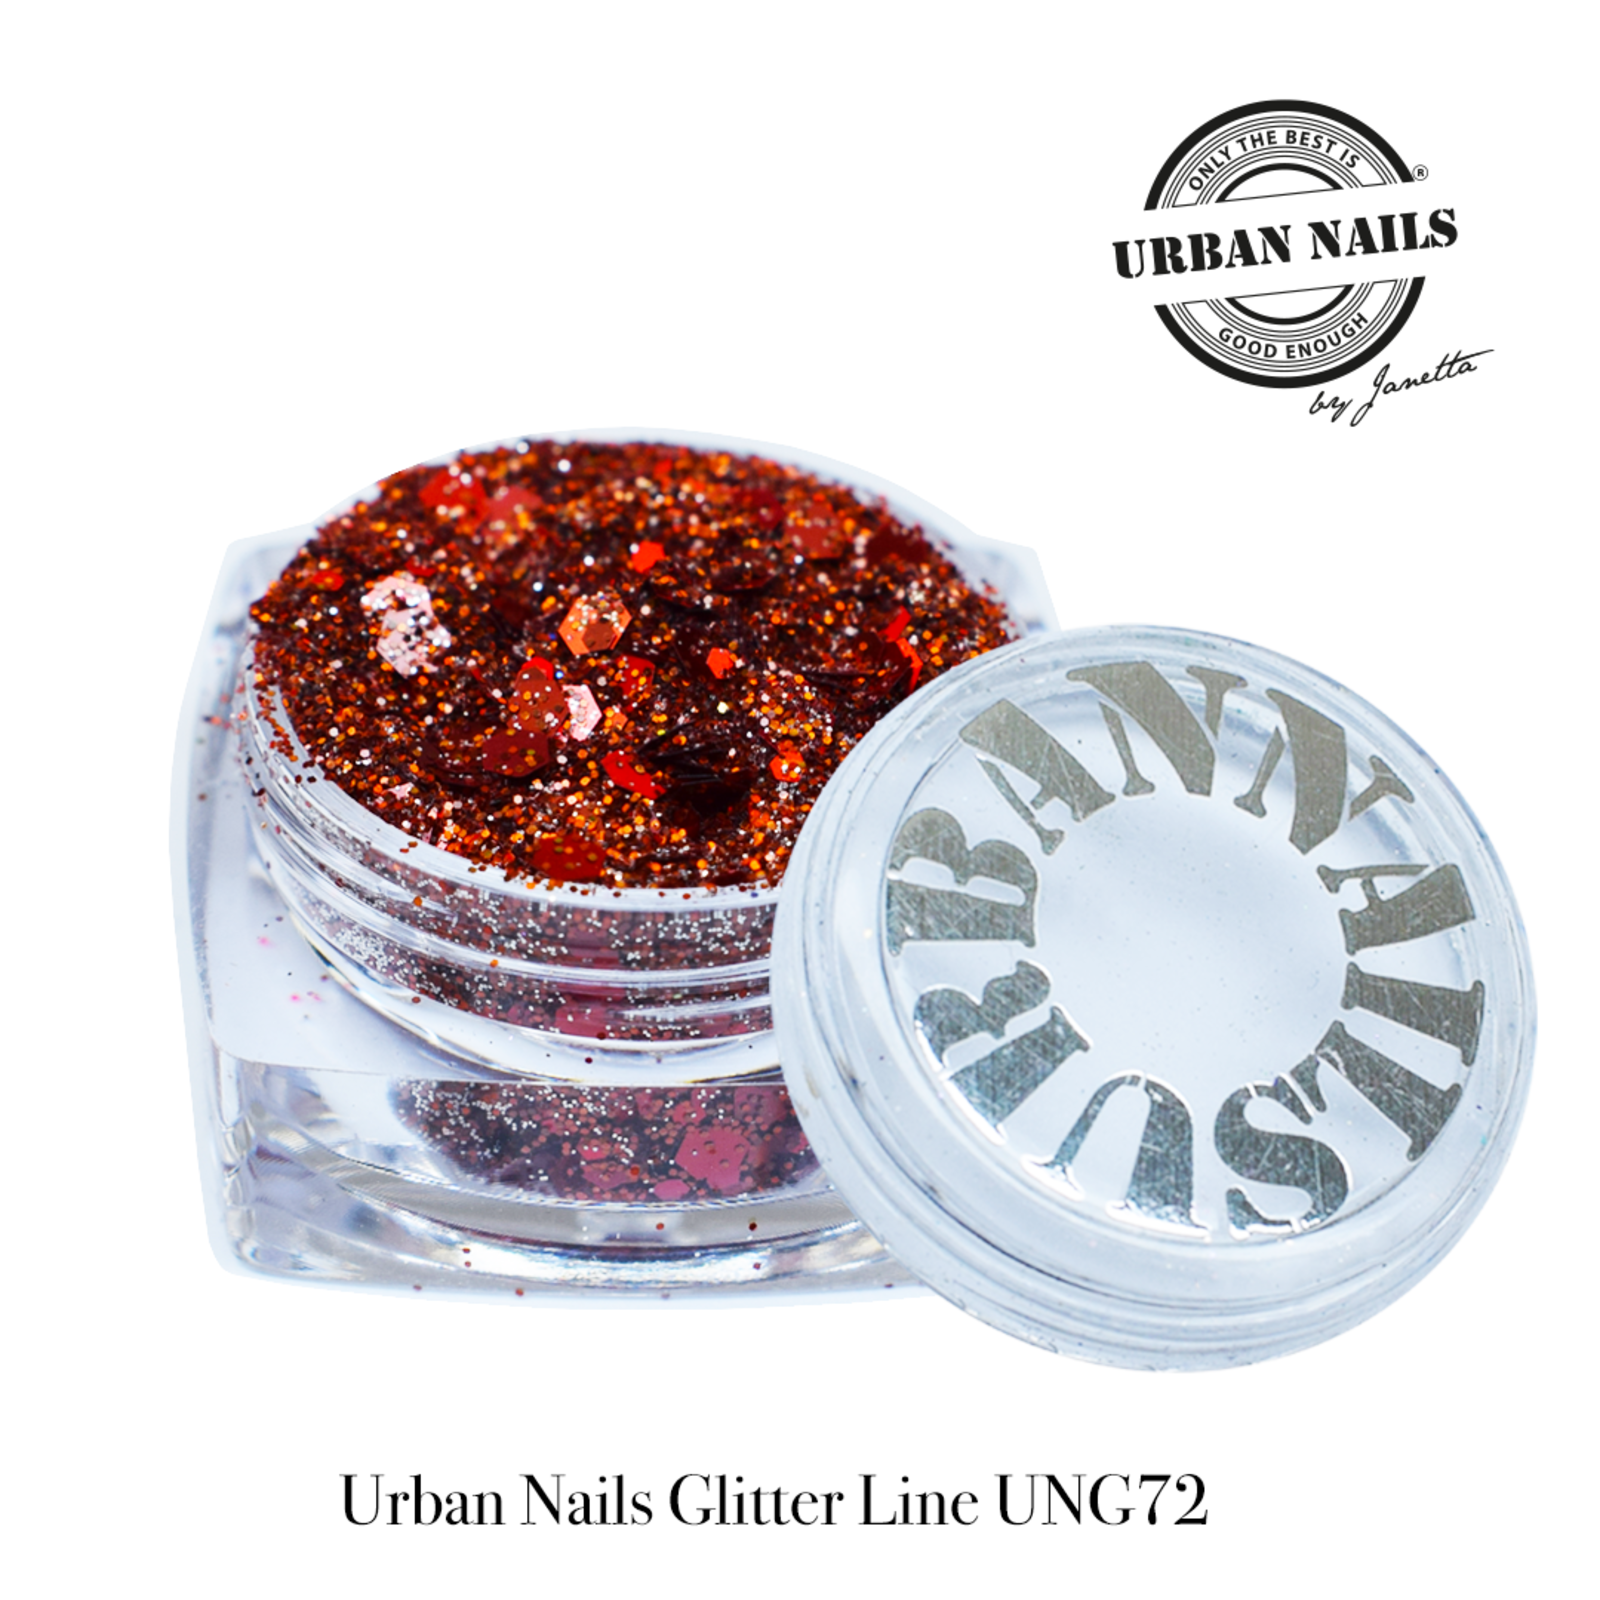 Urban nails Glitter Line UNG72